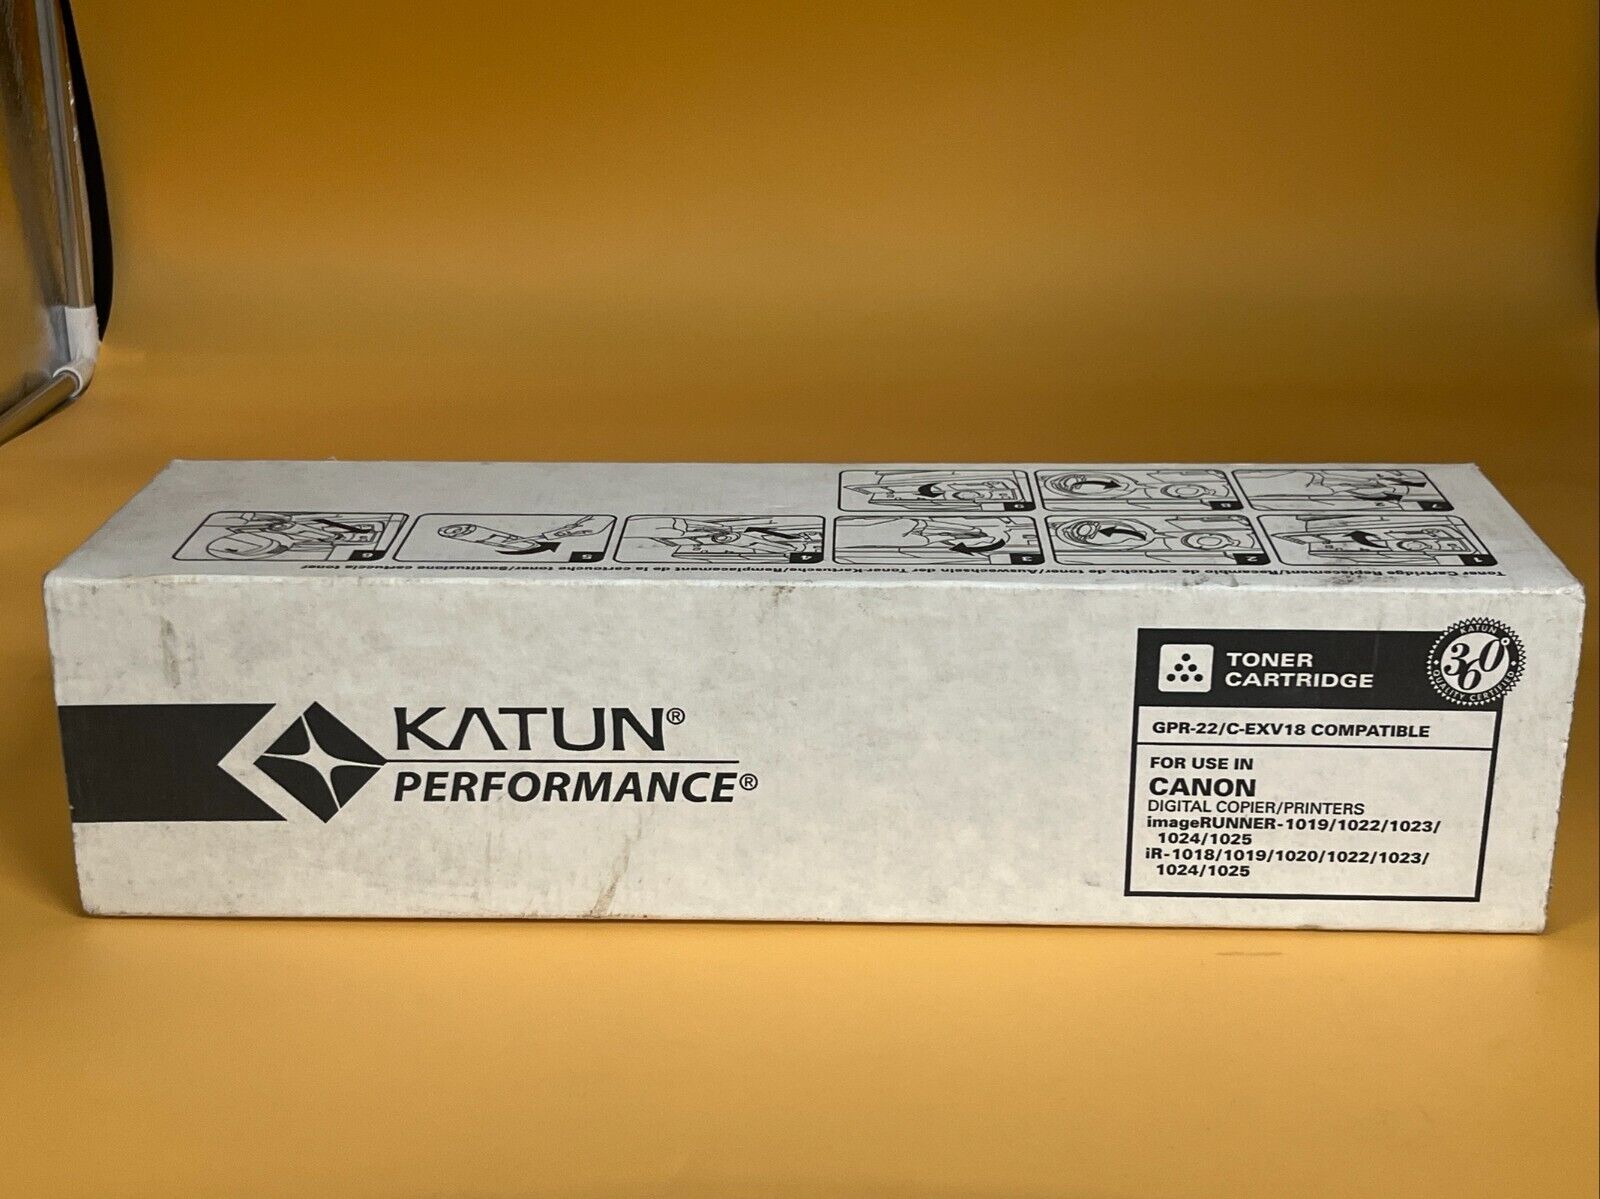 Katun Performance Toner CartridgeGPR-22/C-EXV18 For Canon Digital Copier/Printer